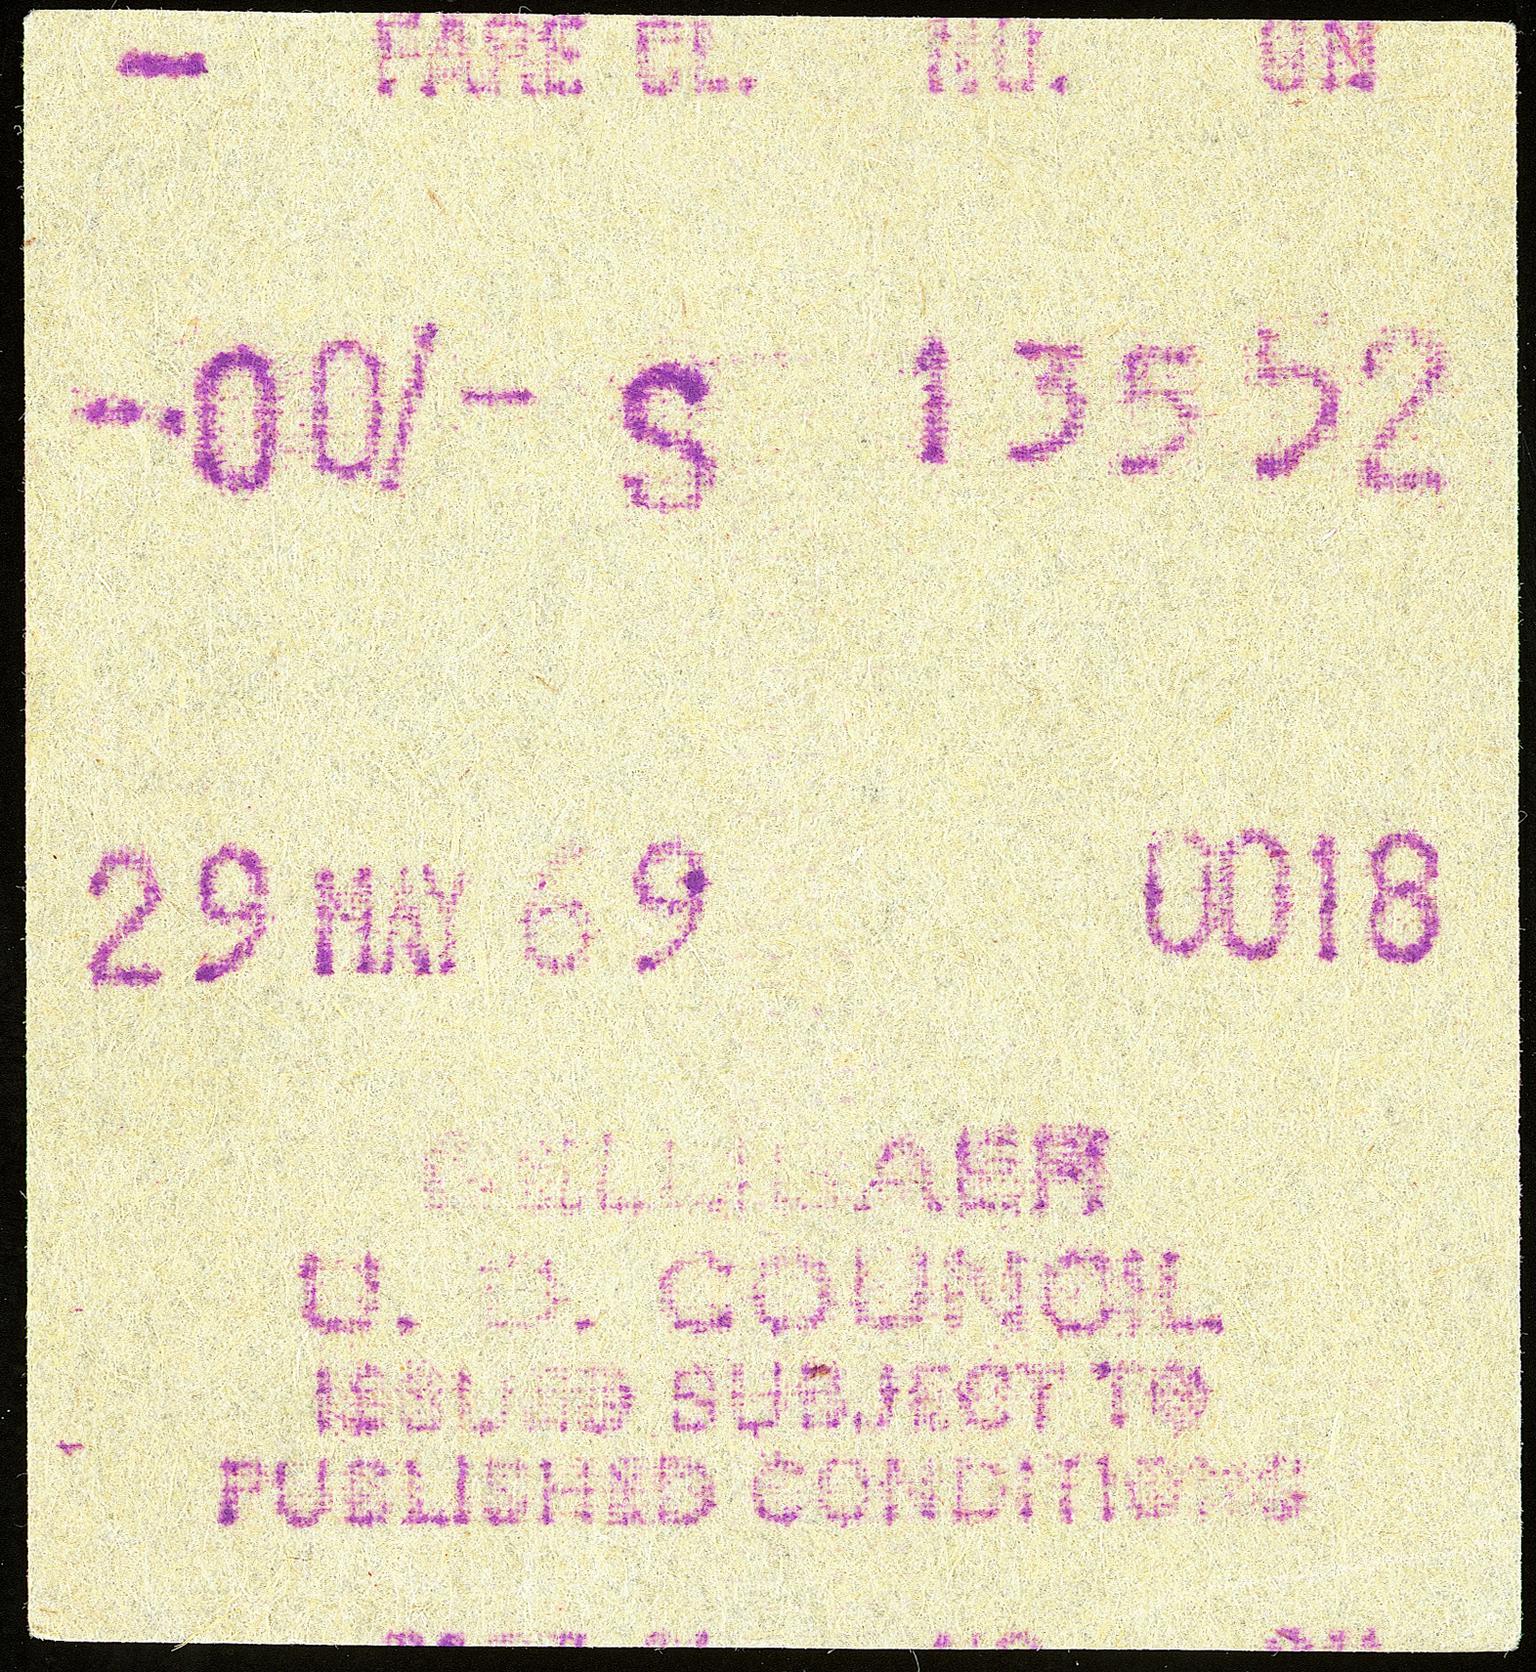 Gelligaer U.D.C. bus ticket